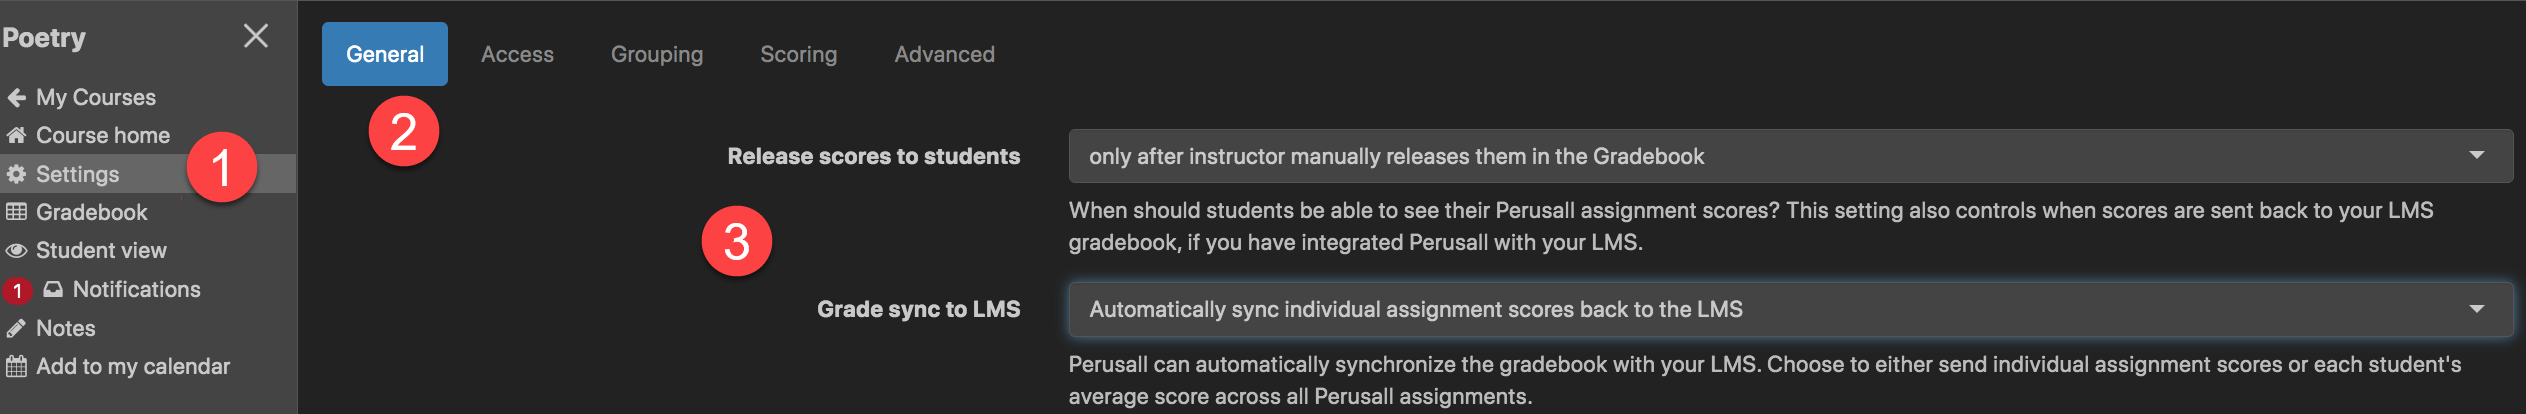 Screenshot illustrating Perusall setting change for LMS grade sync option.